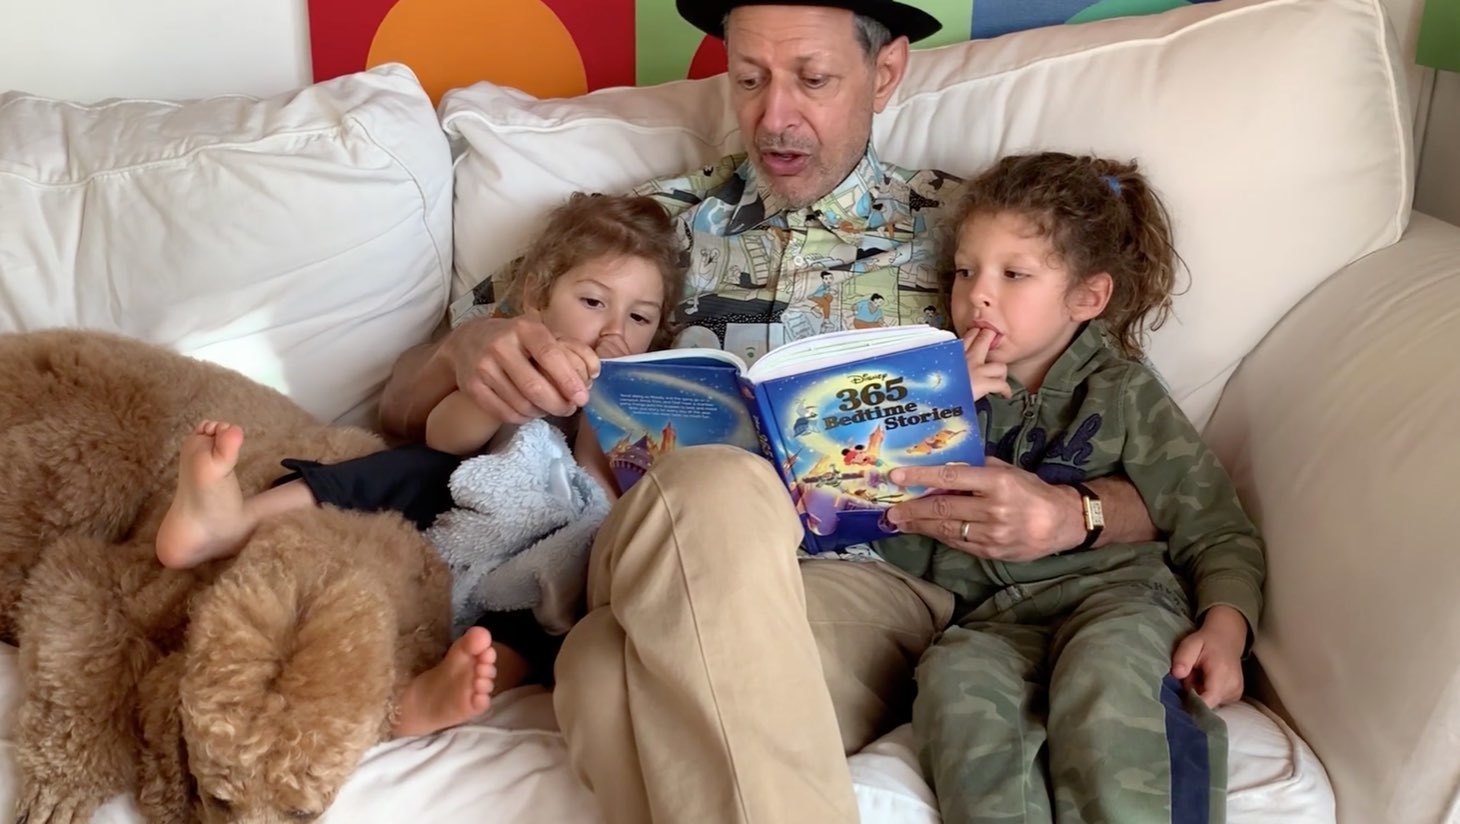 Jeff Goldblum reading a book to his chirldren